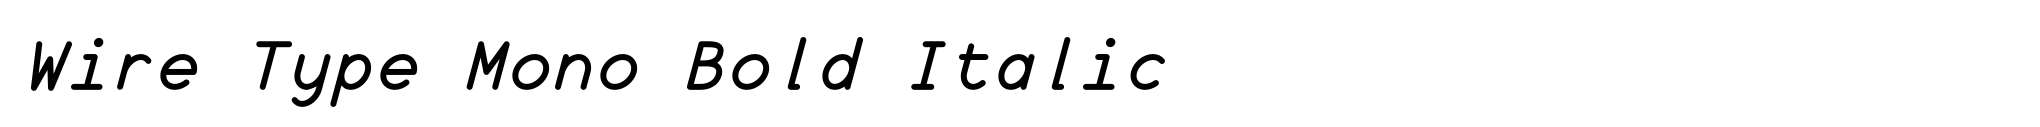 Wire Type Mono Bold Italic image